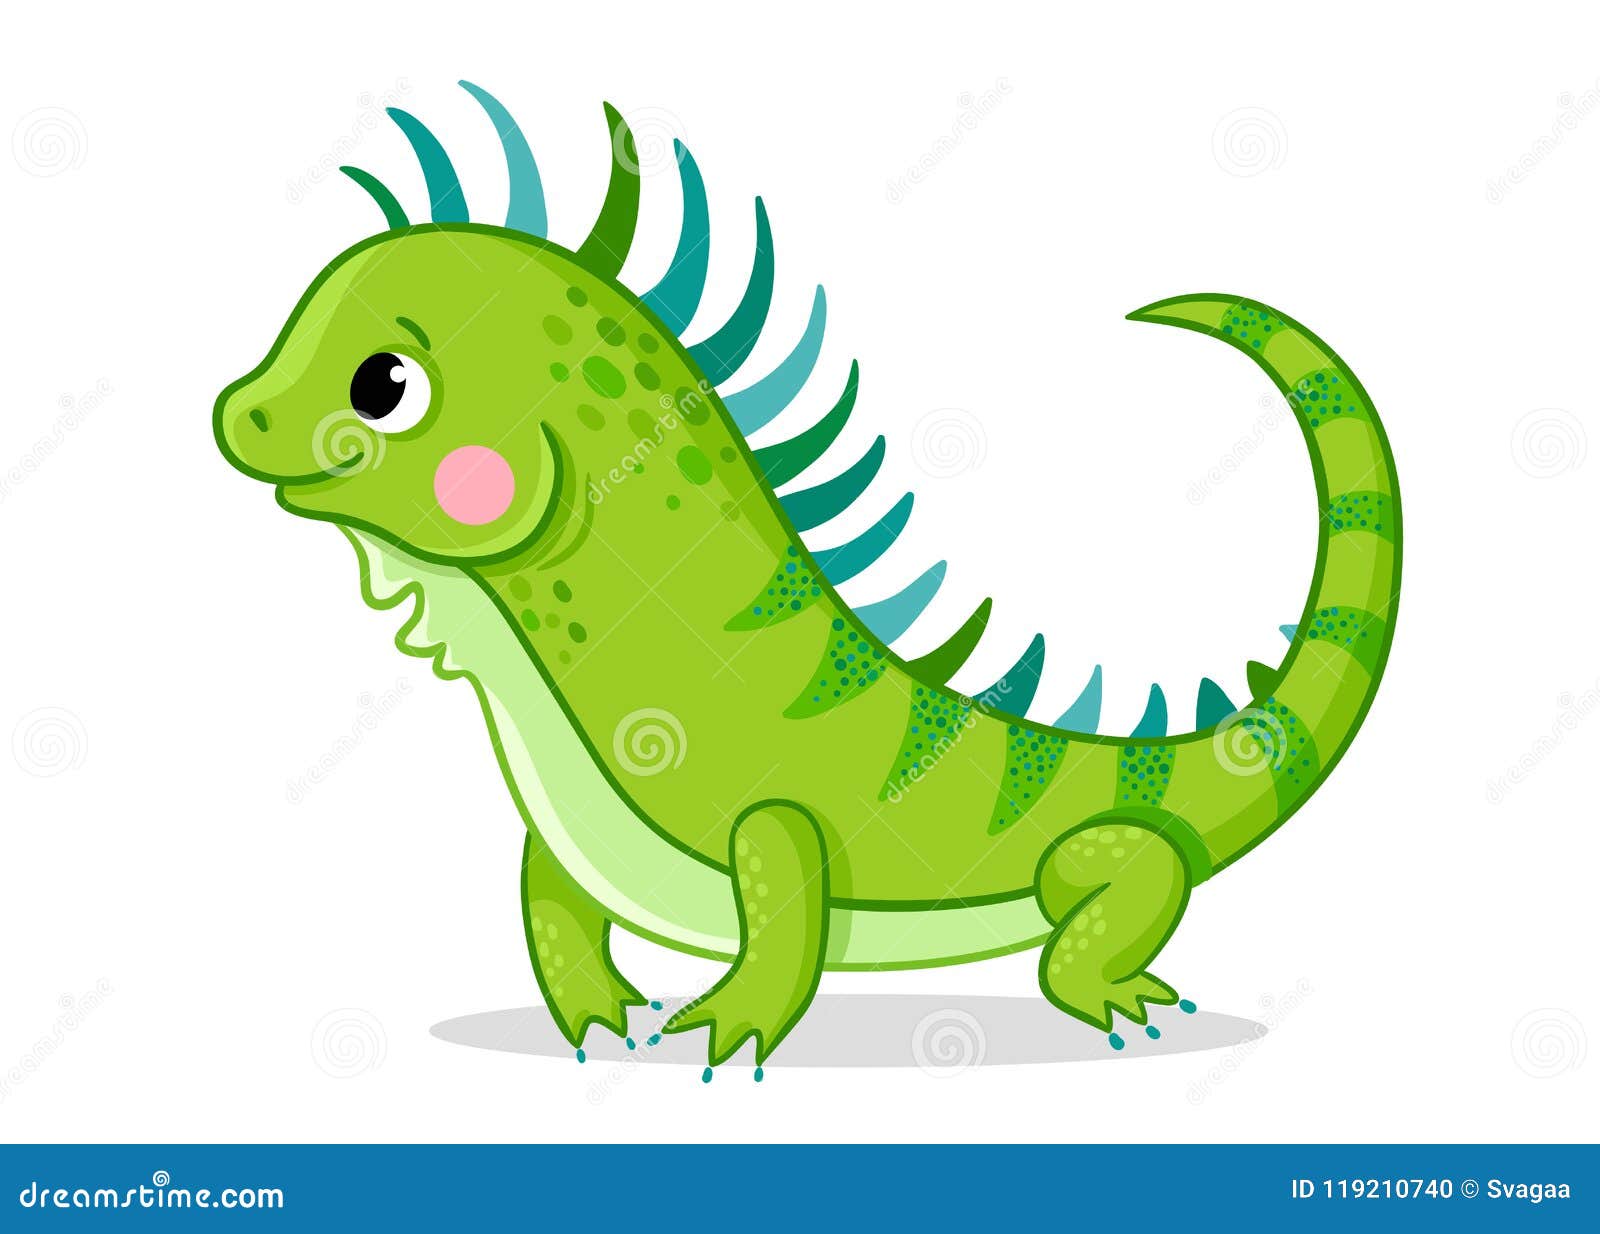 Cute Iguana Cartoon Royalty-Free Illustration | CartoonDealer.com #91969563